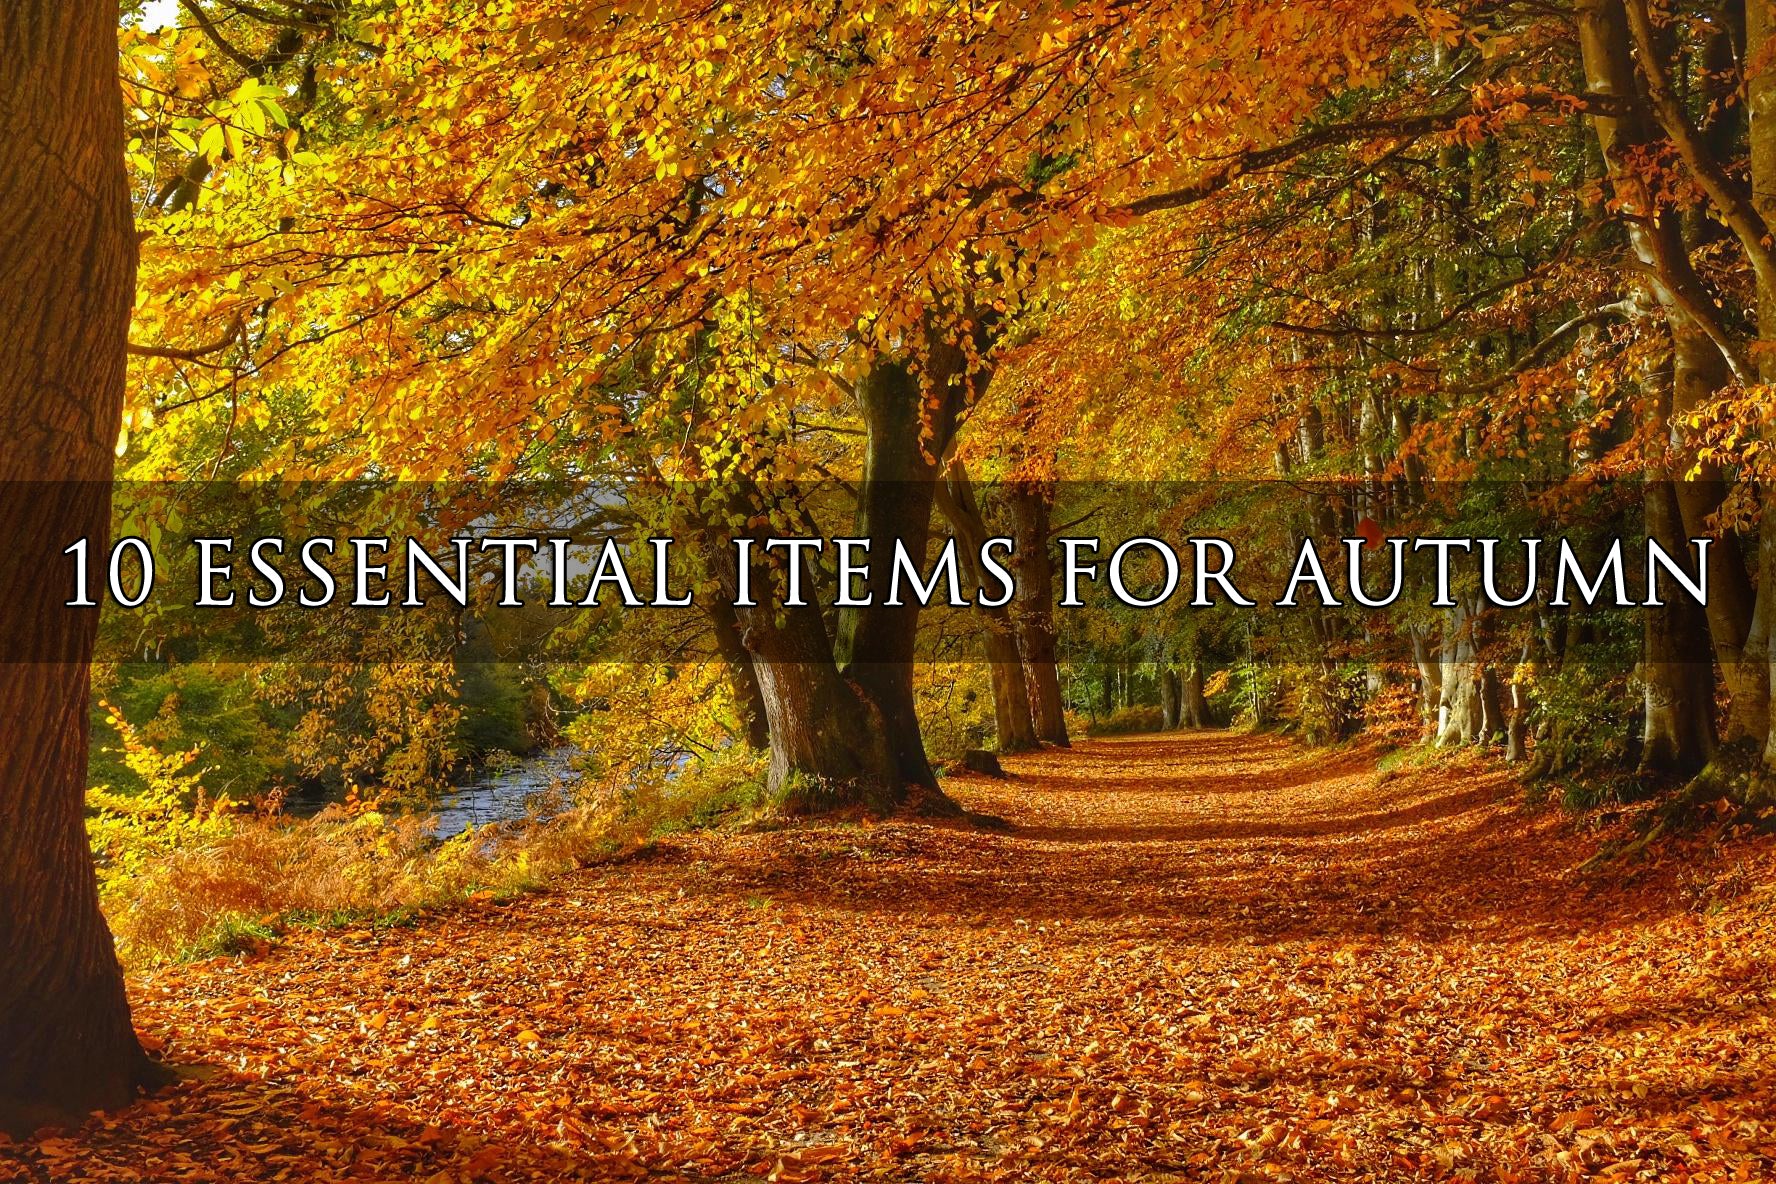 10 Essential items for Autumn!